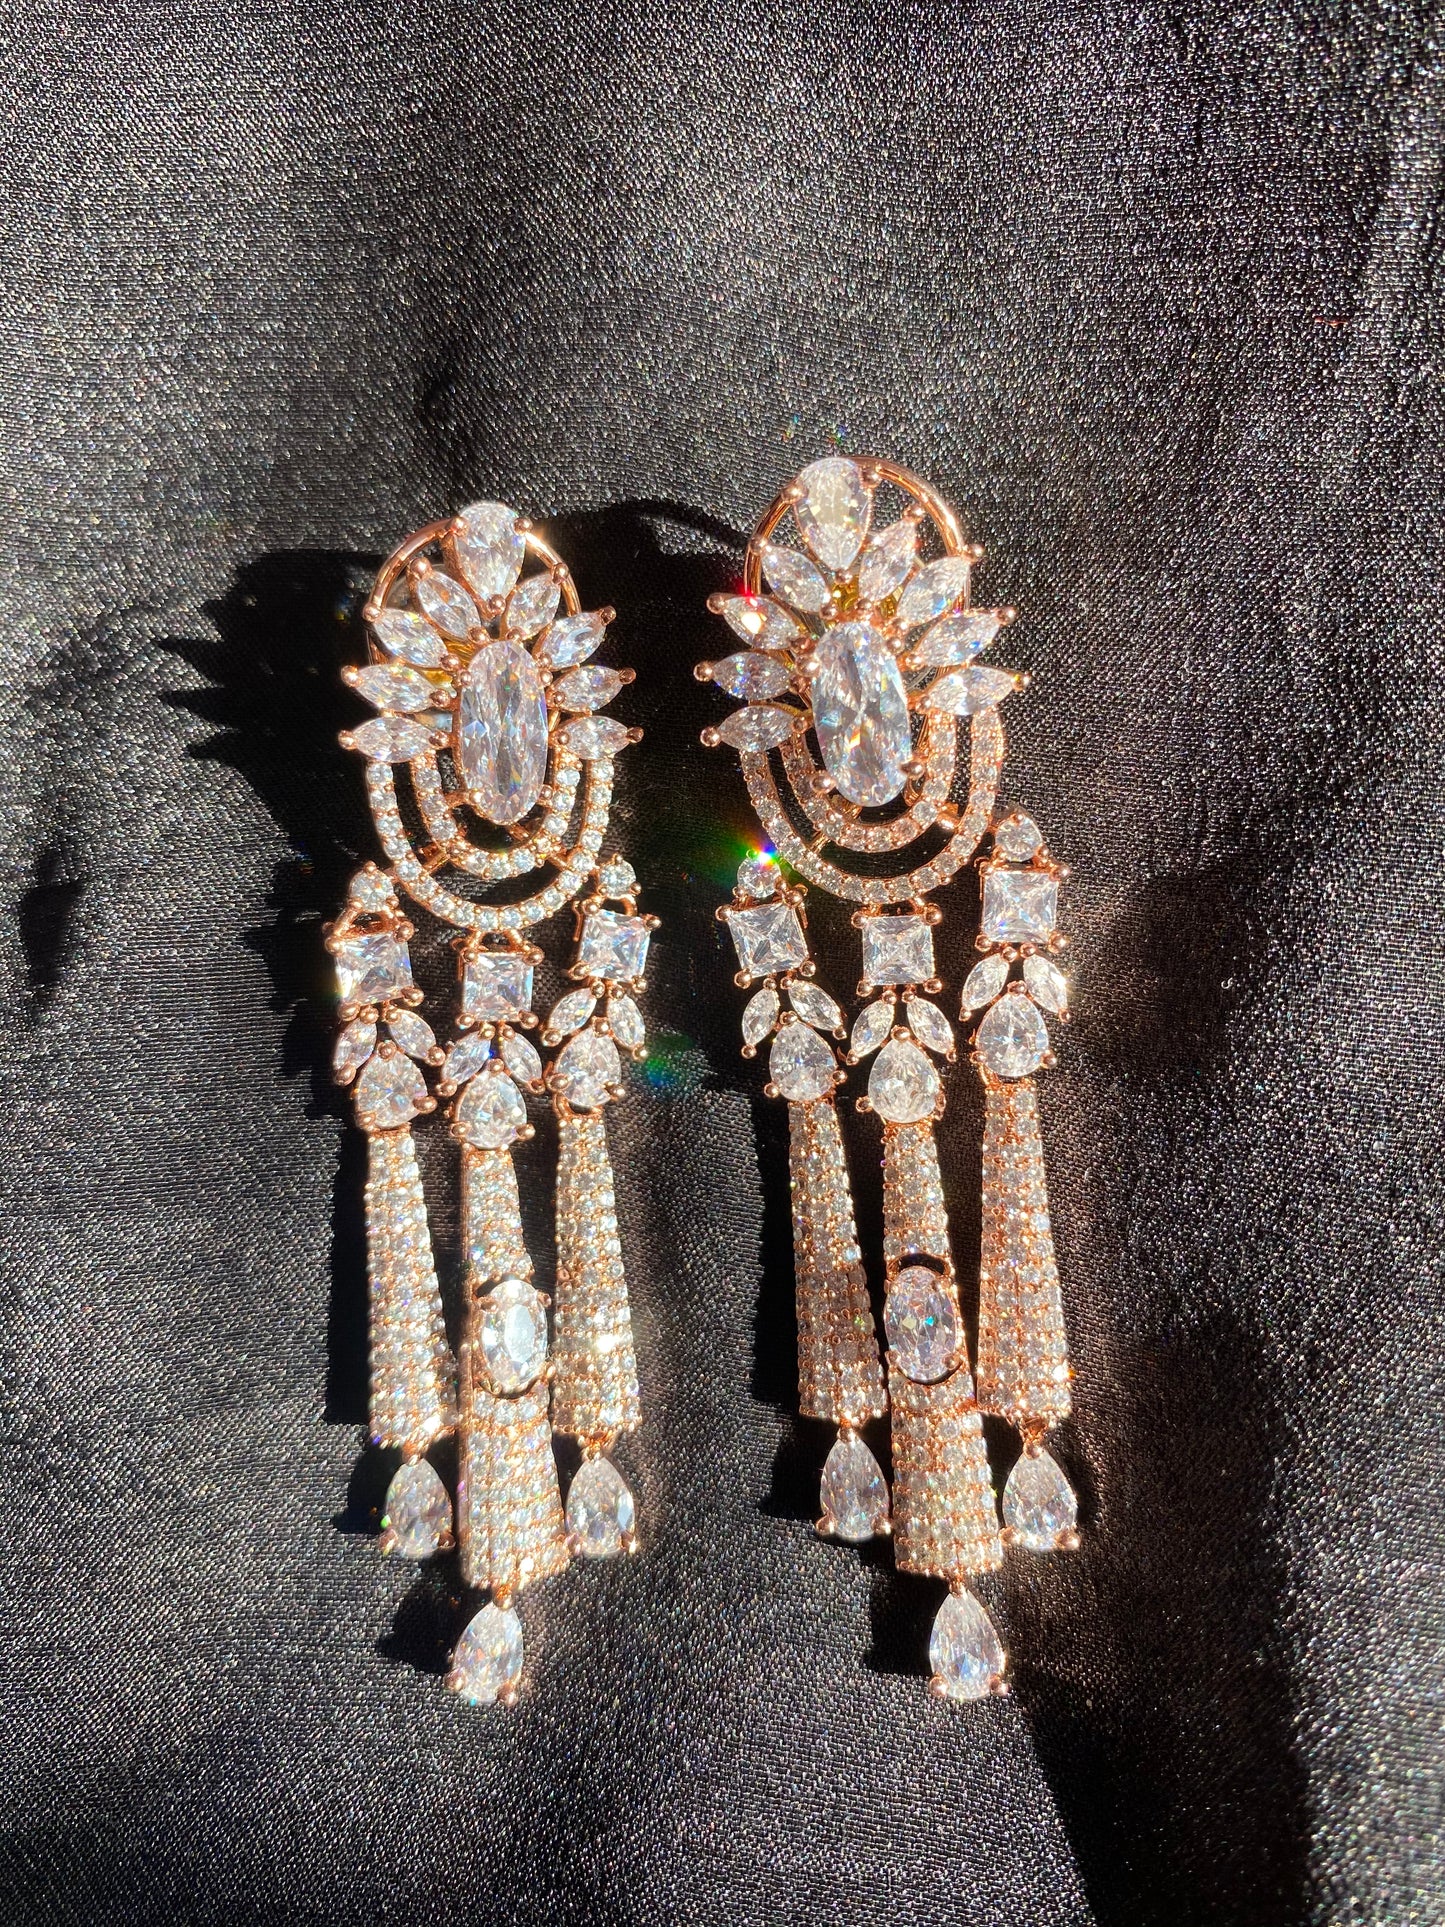 Stunning Rhinestone Earrings